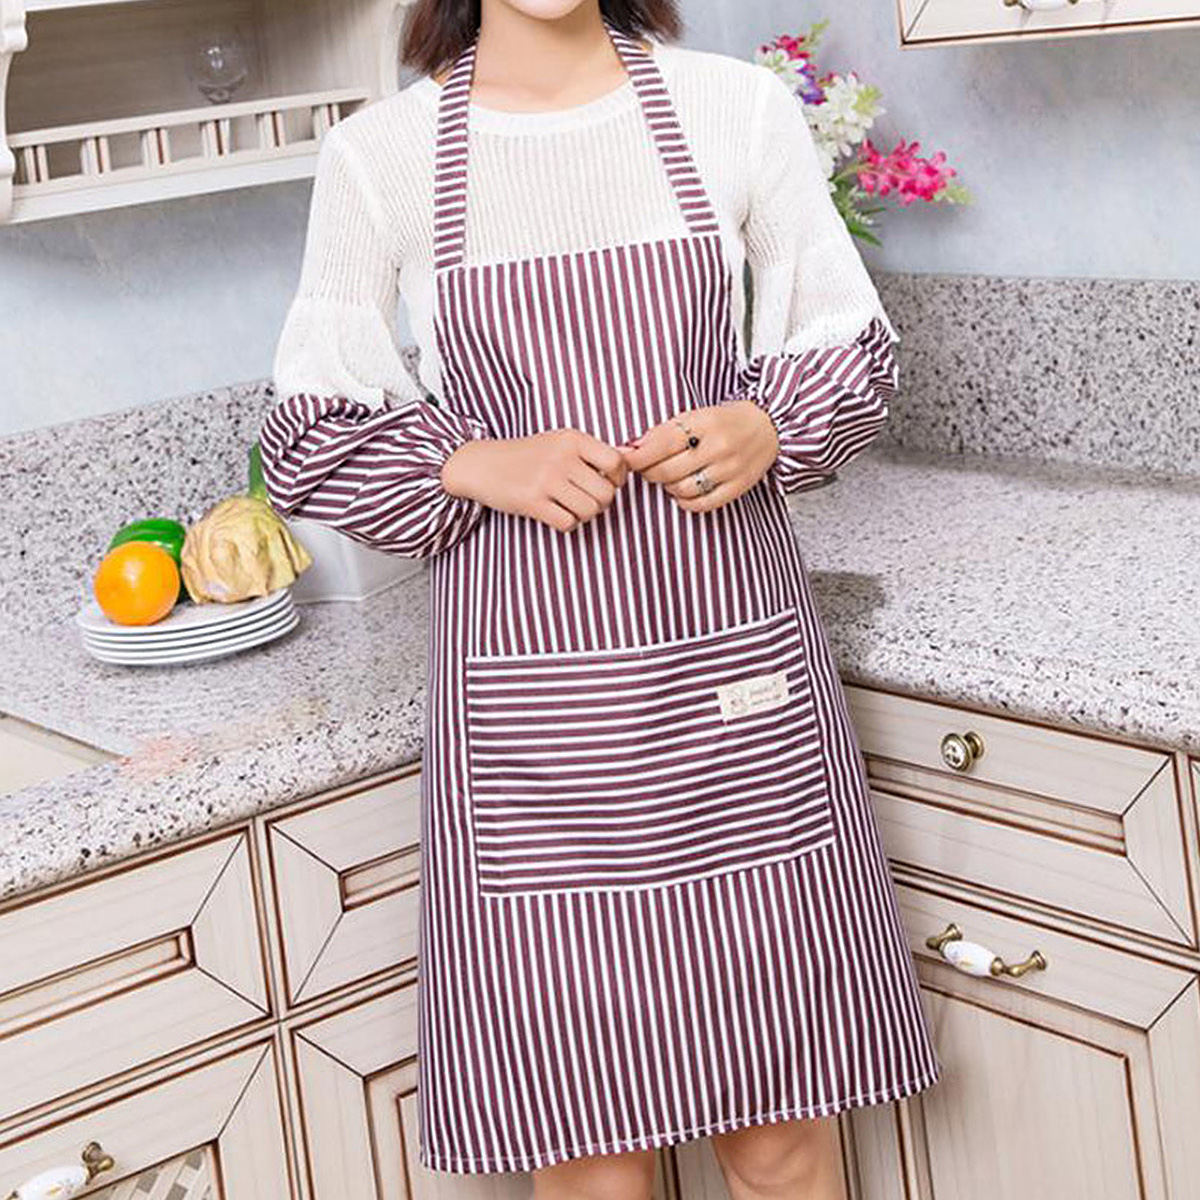 Waterproof Restaurant Home Kitchen Cooking Apron With Sleeve Bib Dress Wpocket Ebay 